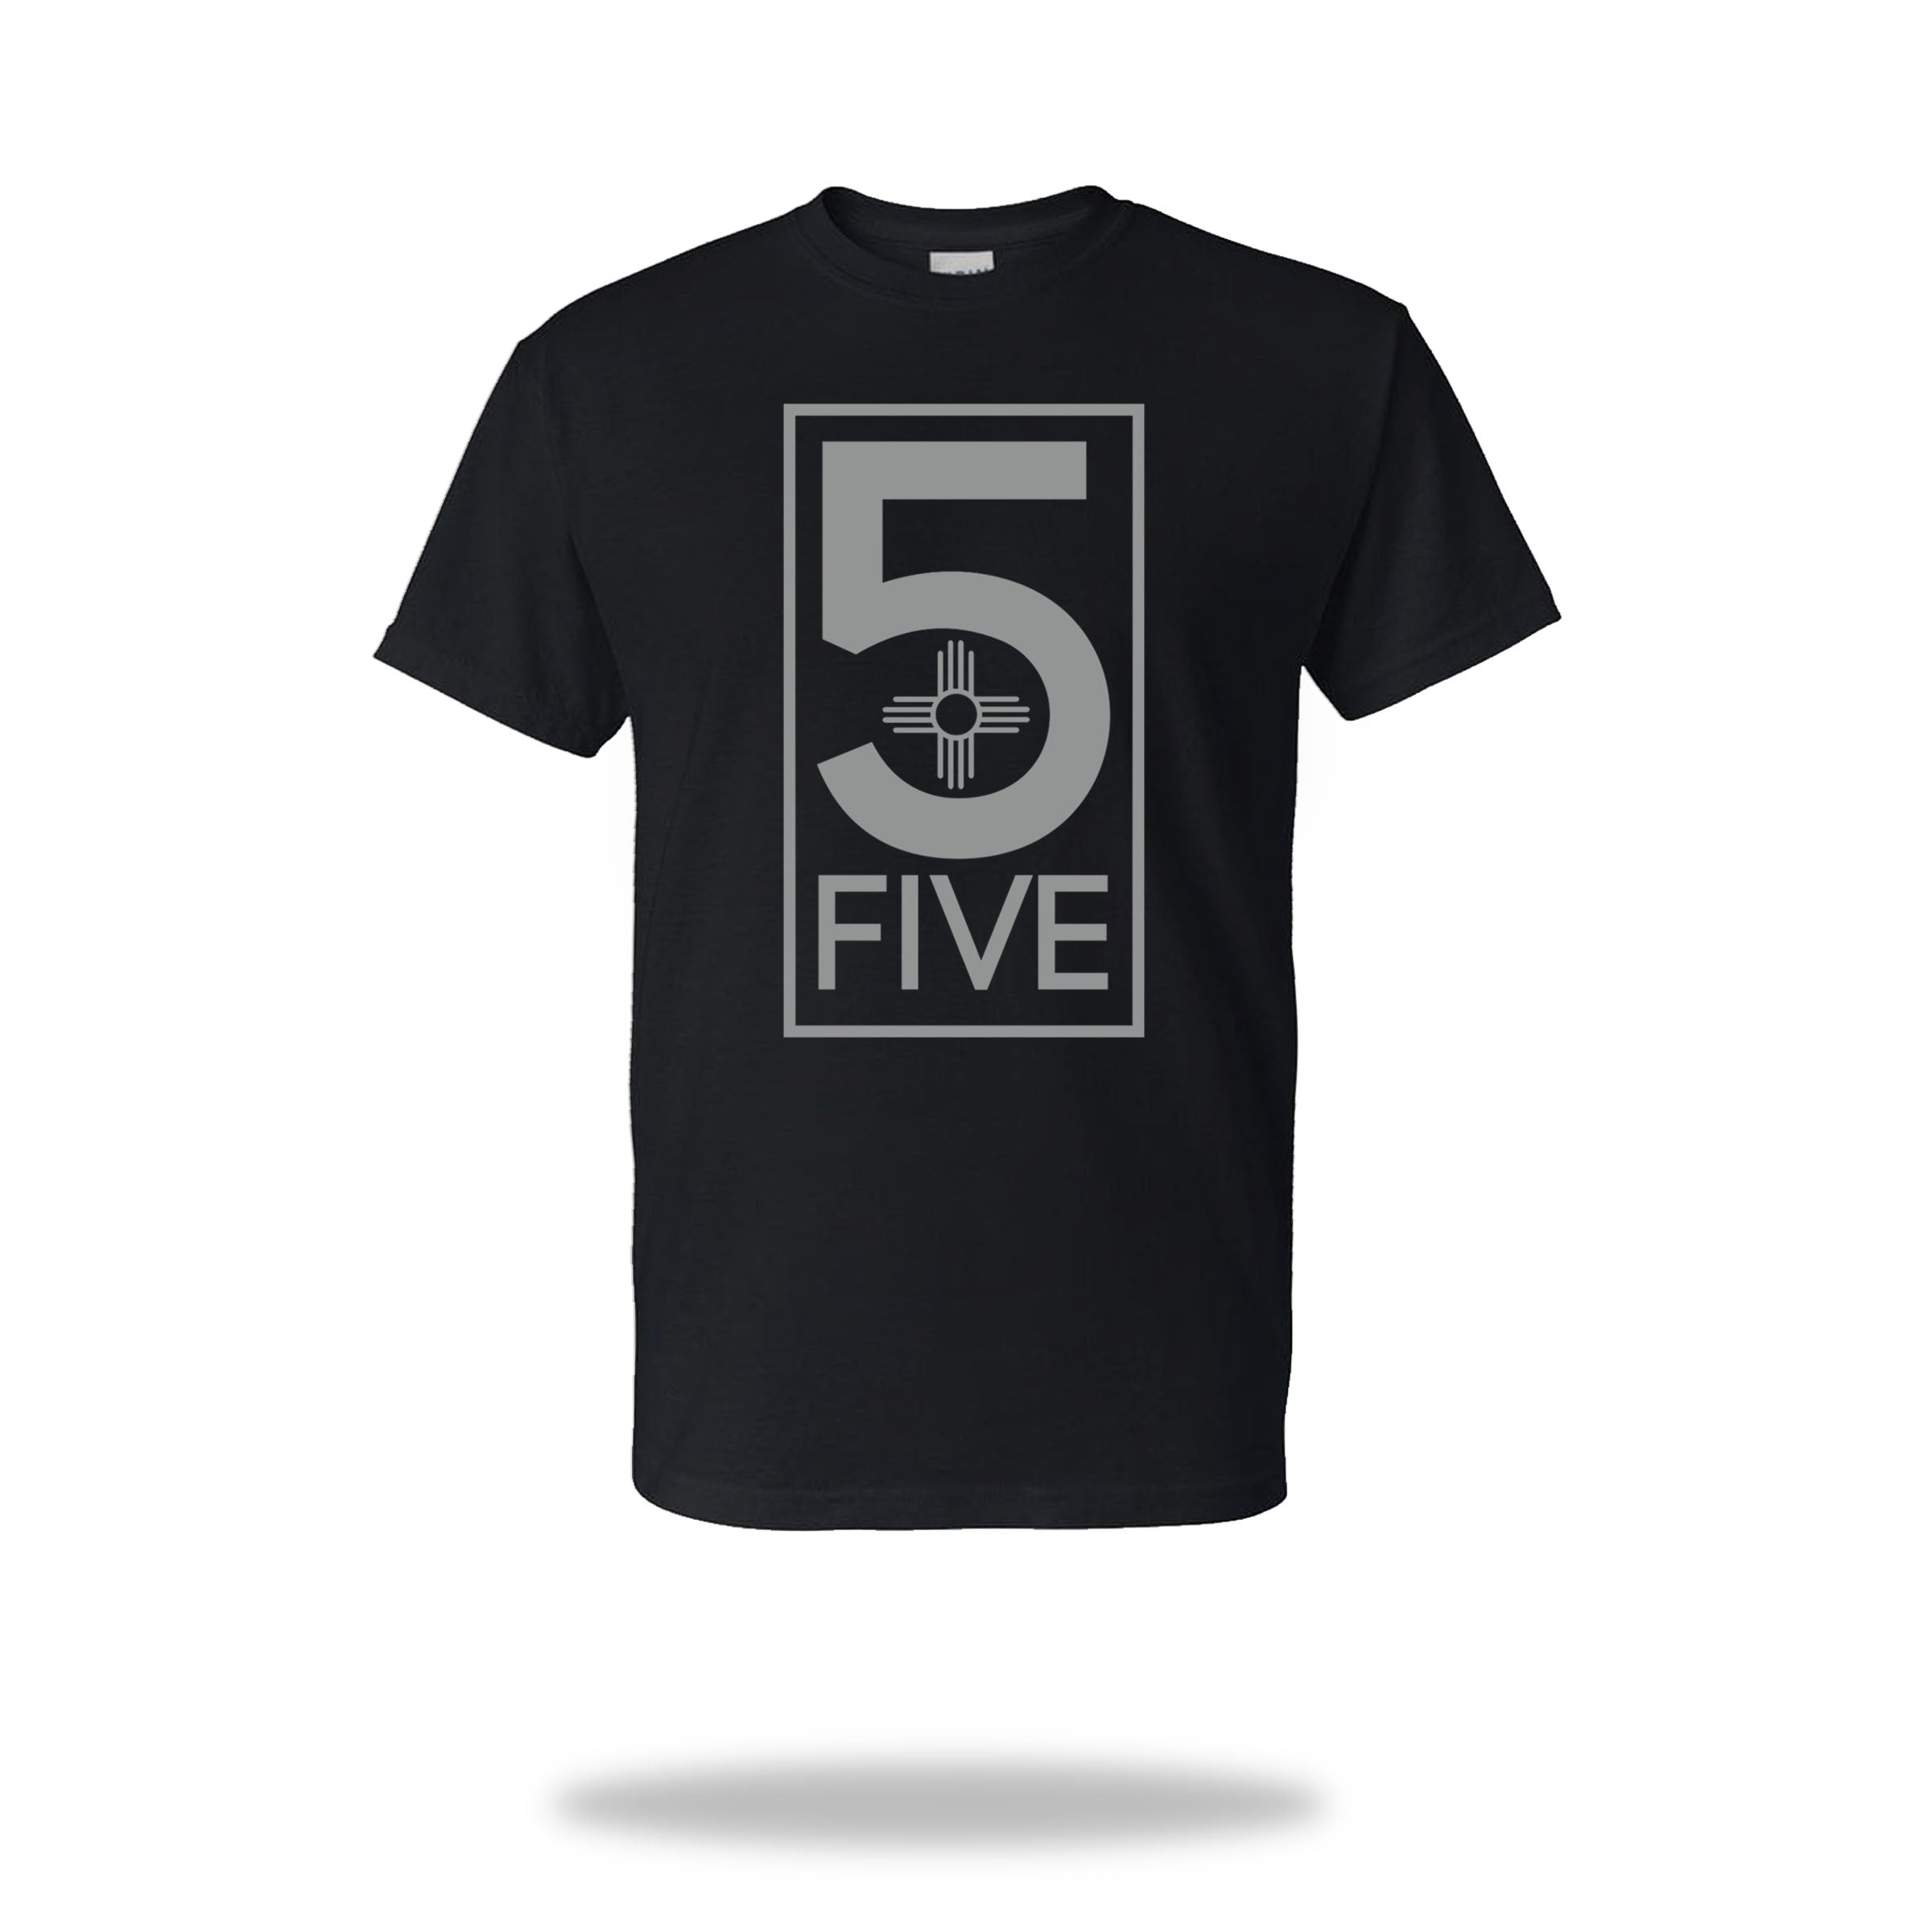 5-0 Five T-Shirt